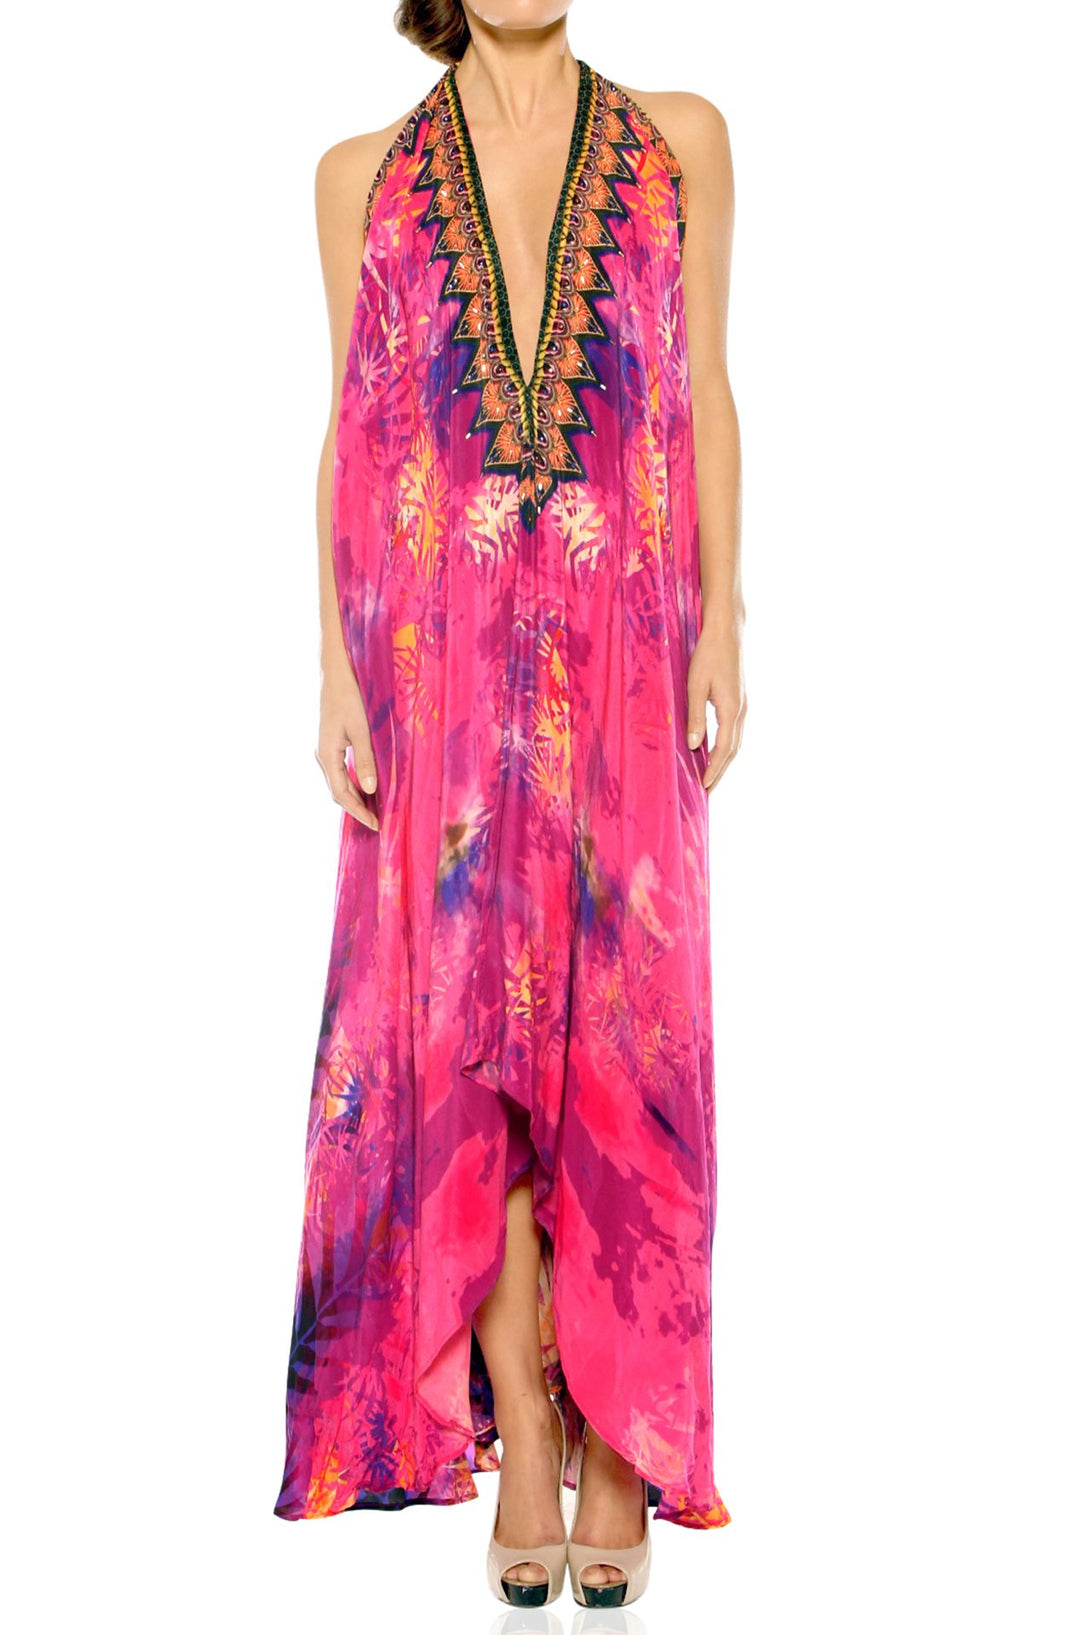  purple formal dress, Shahida Parides, beach maxi dress, long summer dresses, backless maxi dress,